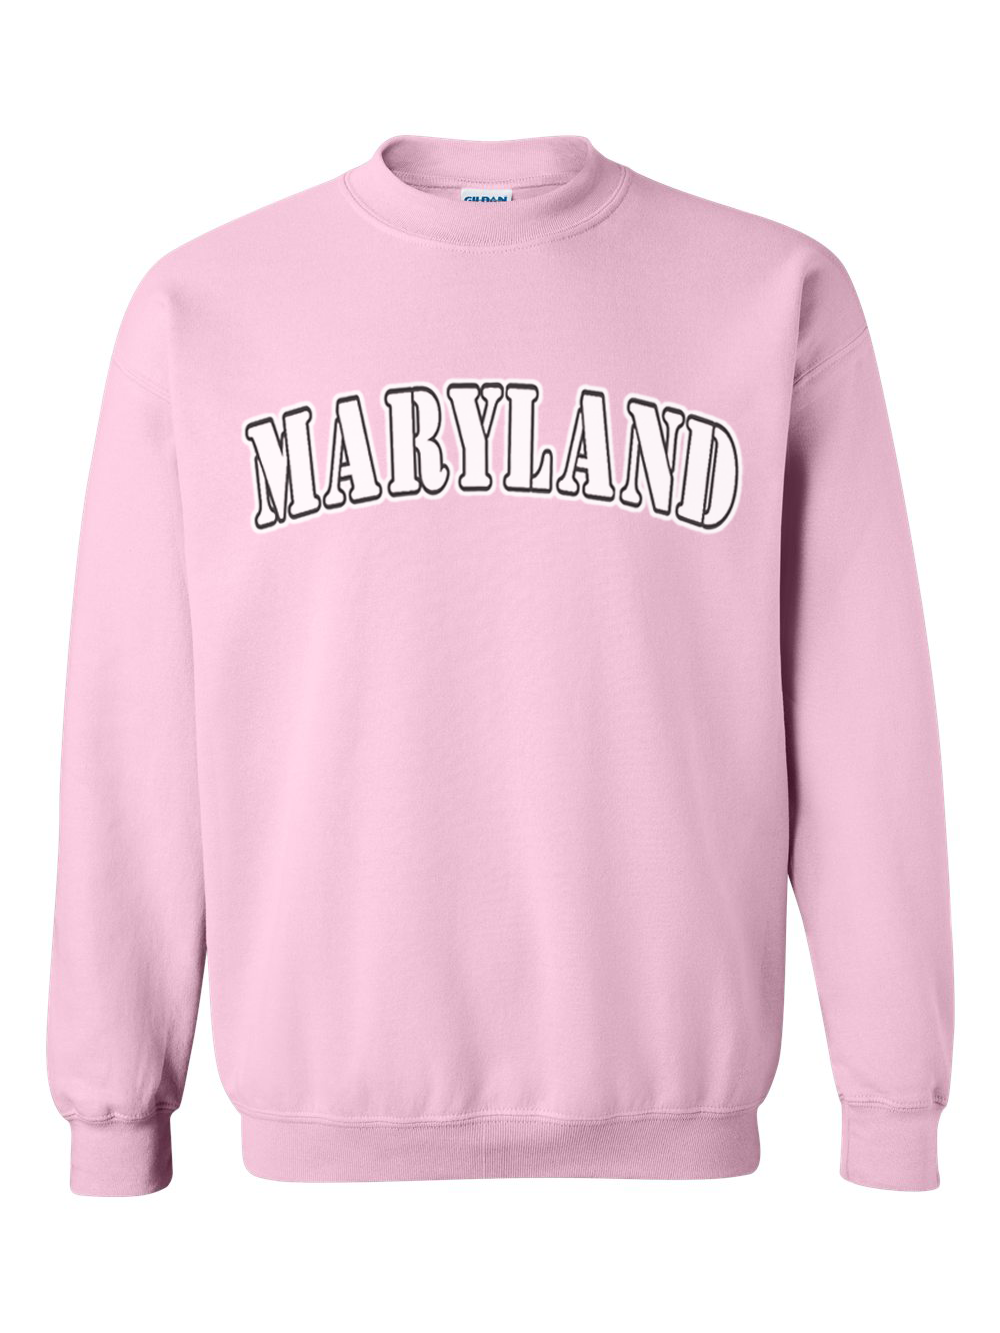 Maryland Gifts White Plain Text Crewneck Sweater (Light Pink)